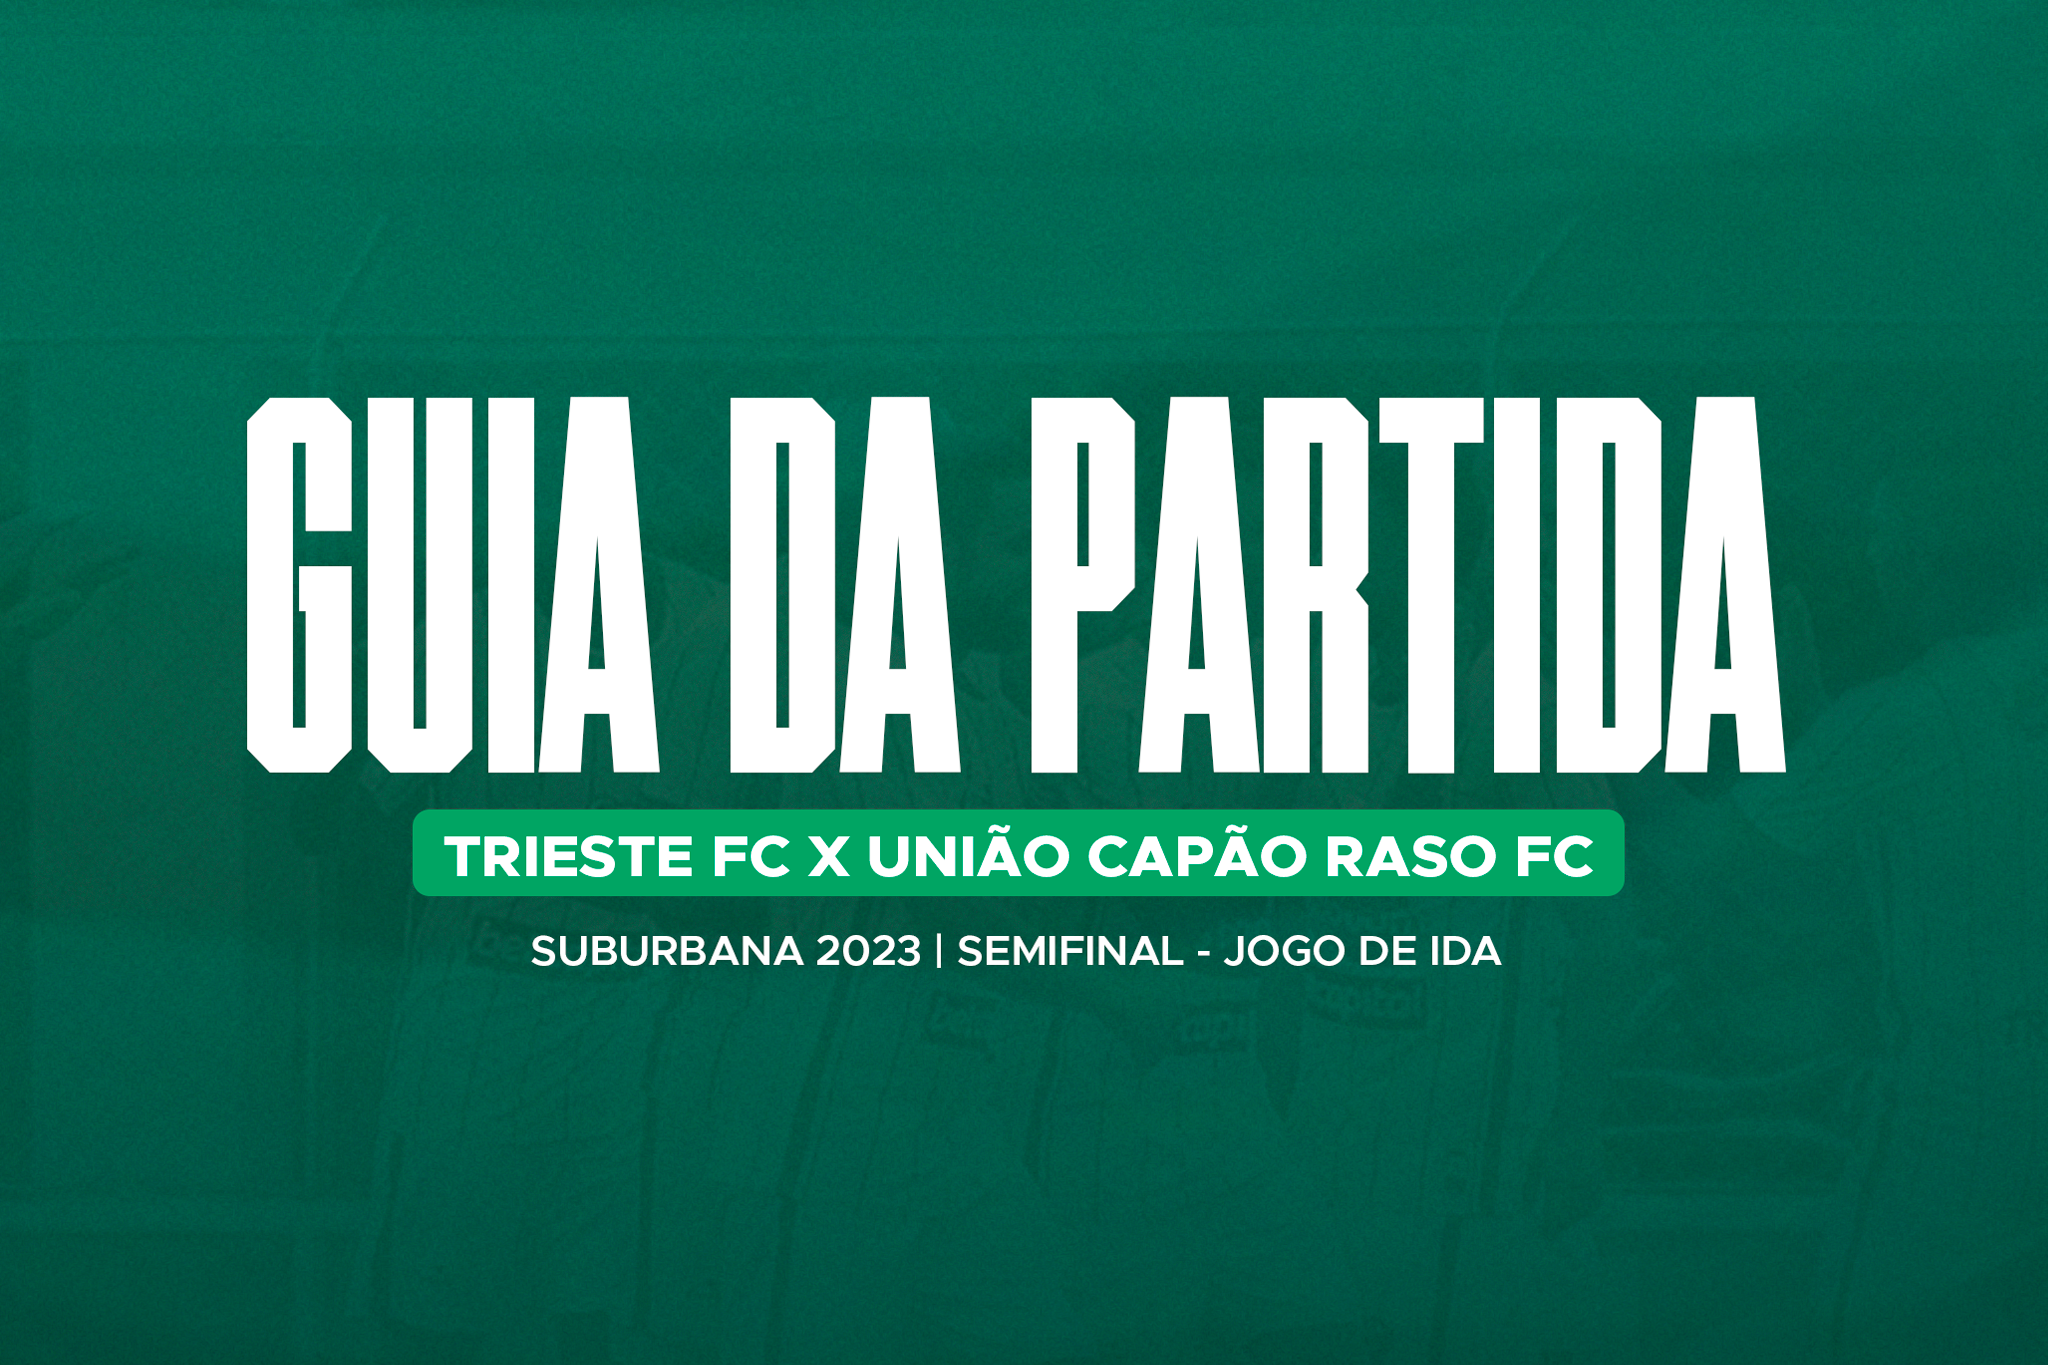 Read more about the article Guia da Partida: Capão Raso x Trieste